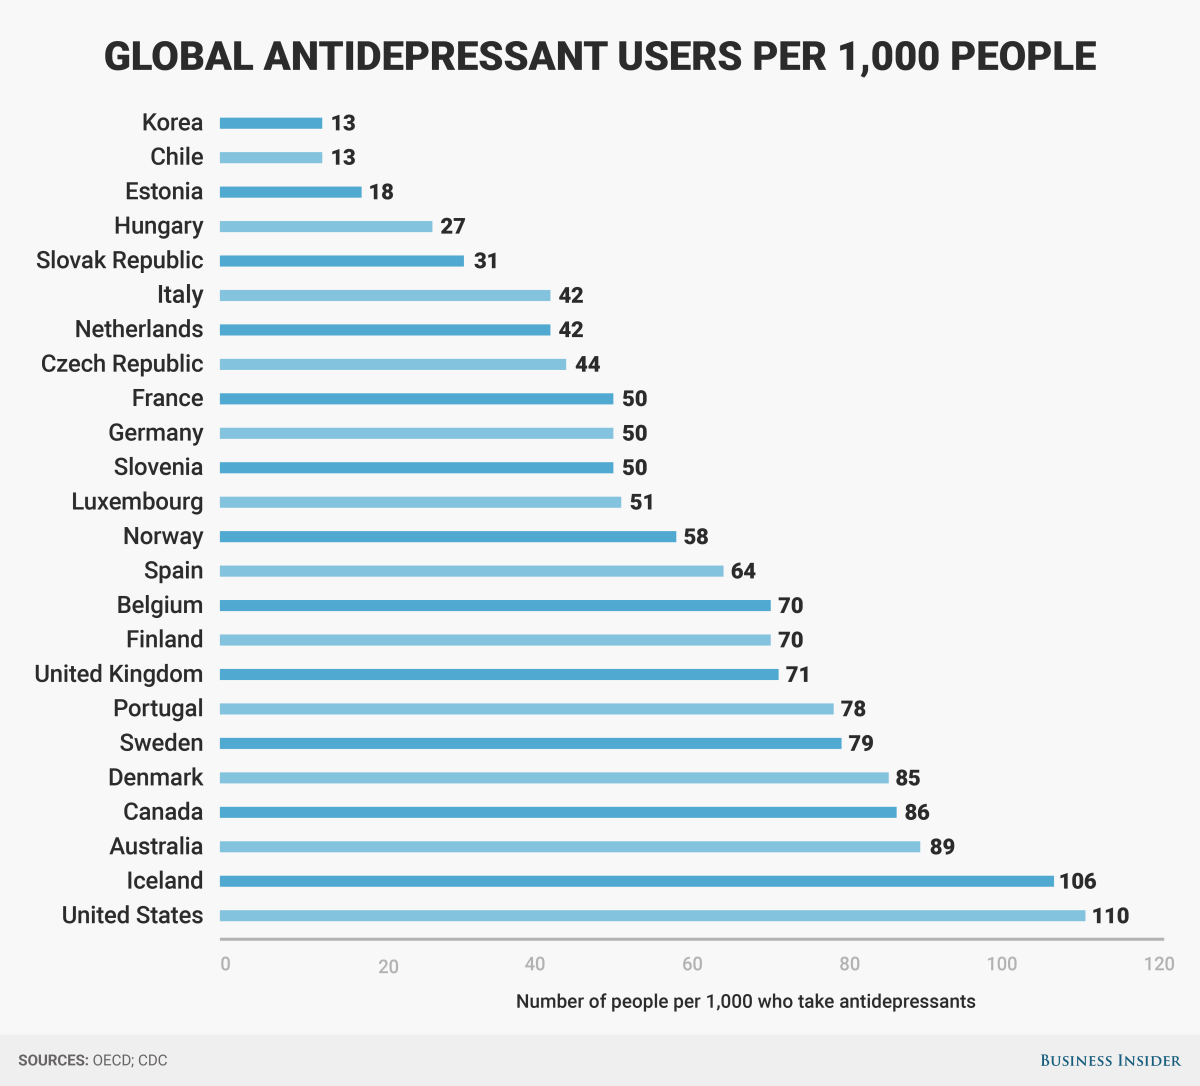 Antidepressant use is rising sharply around the world